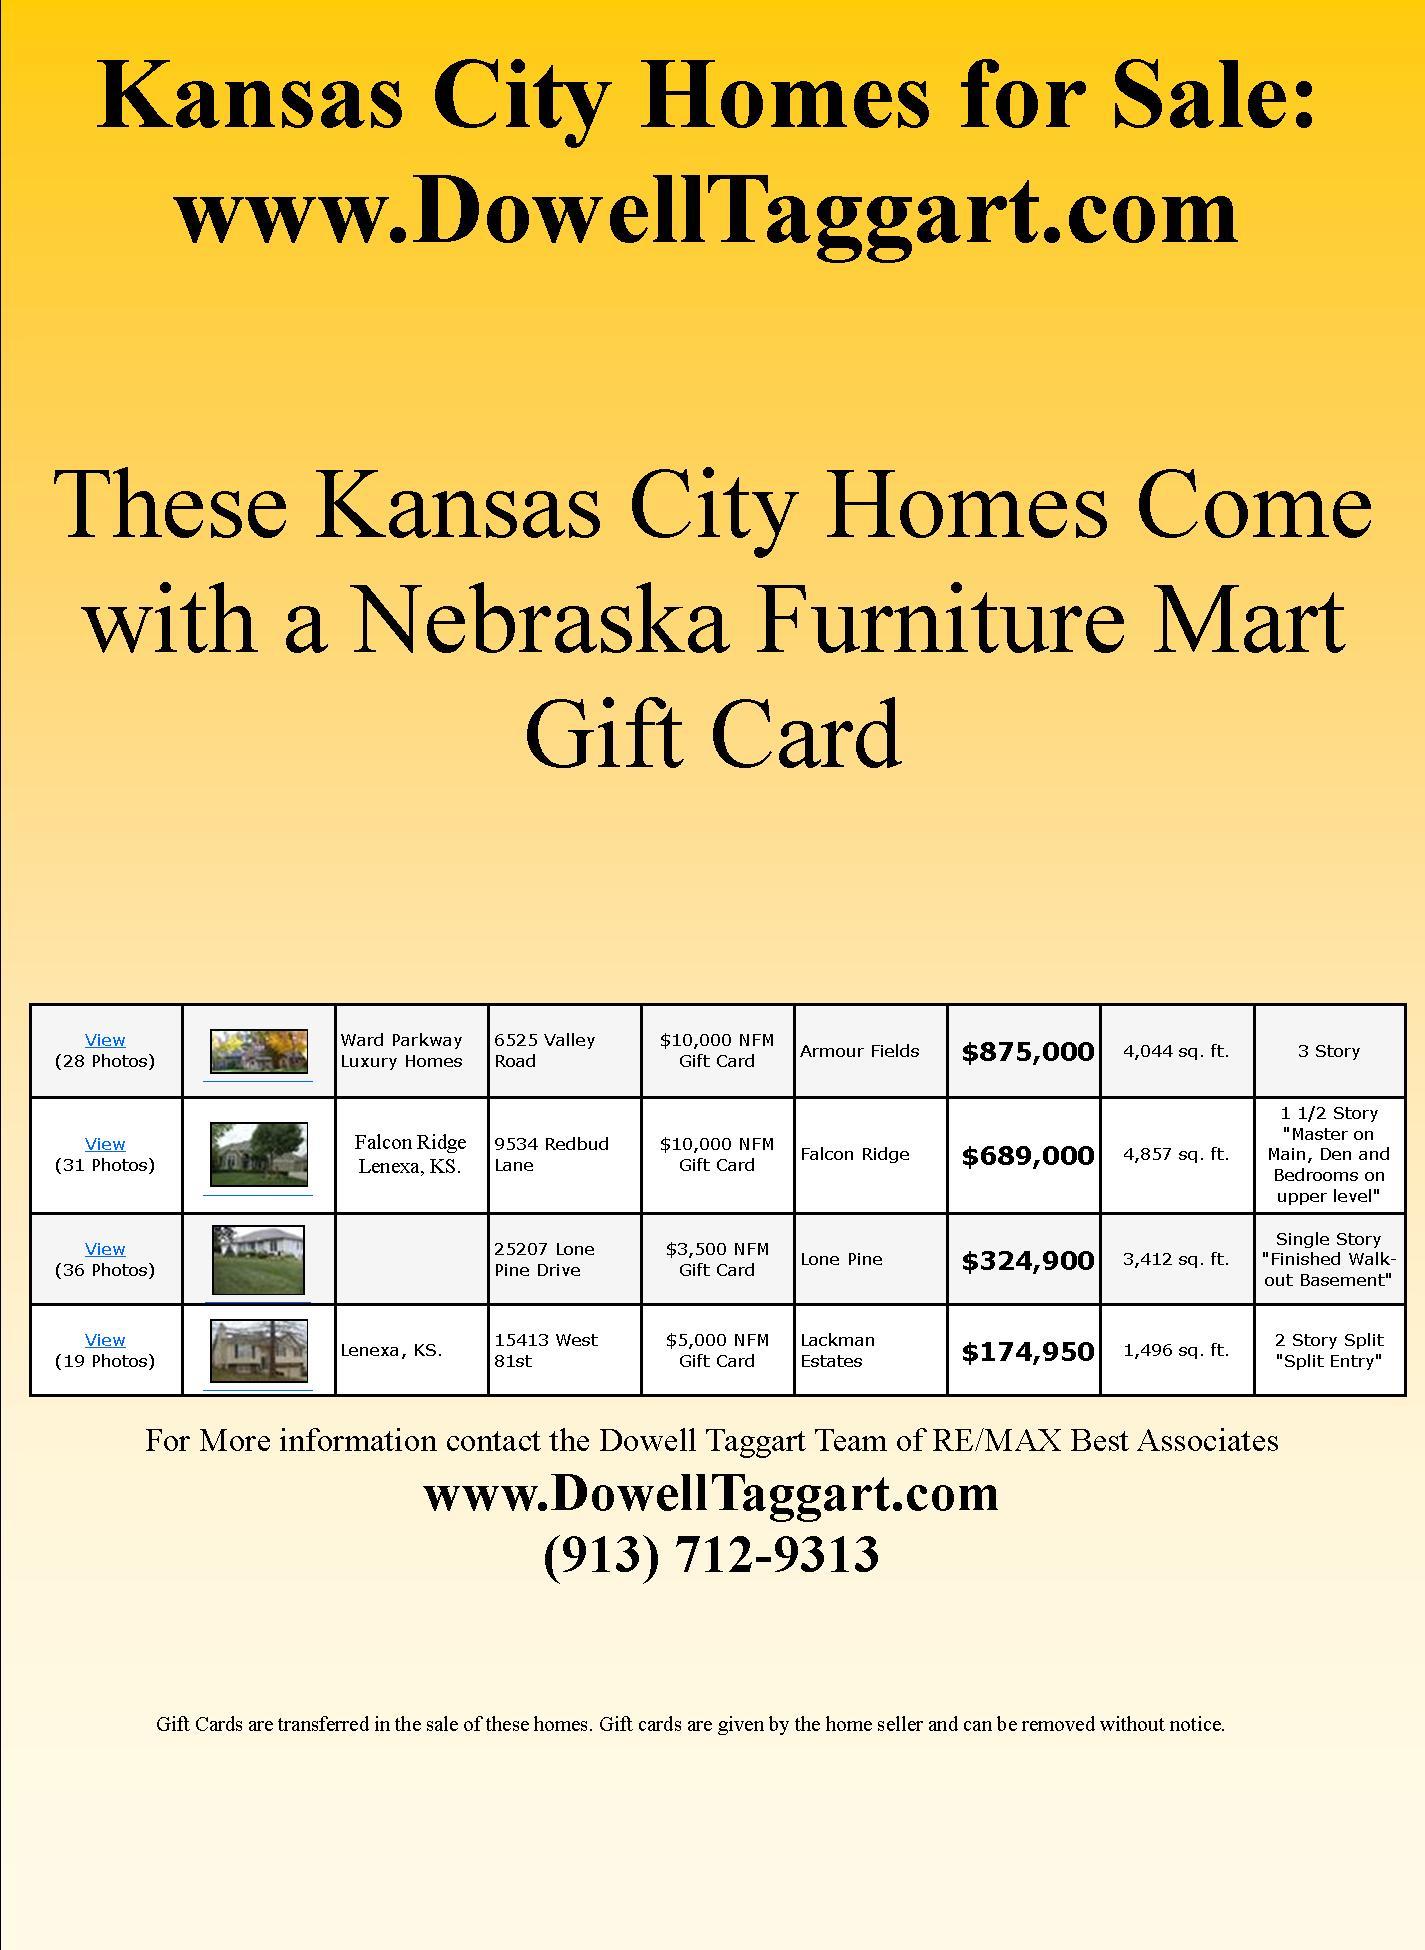 Kansas City homes for sale, Kansas City home for sale